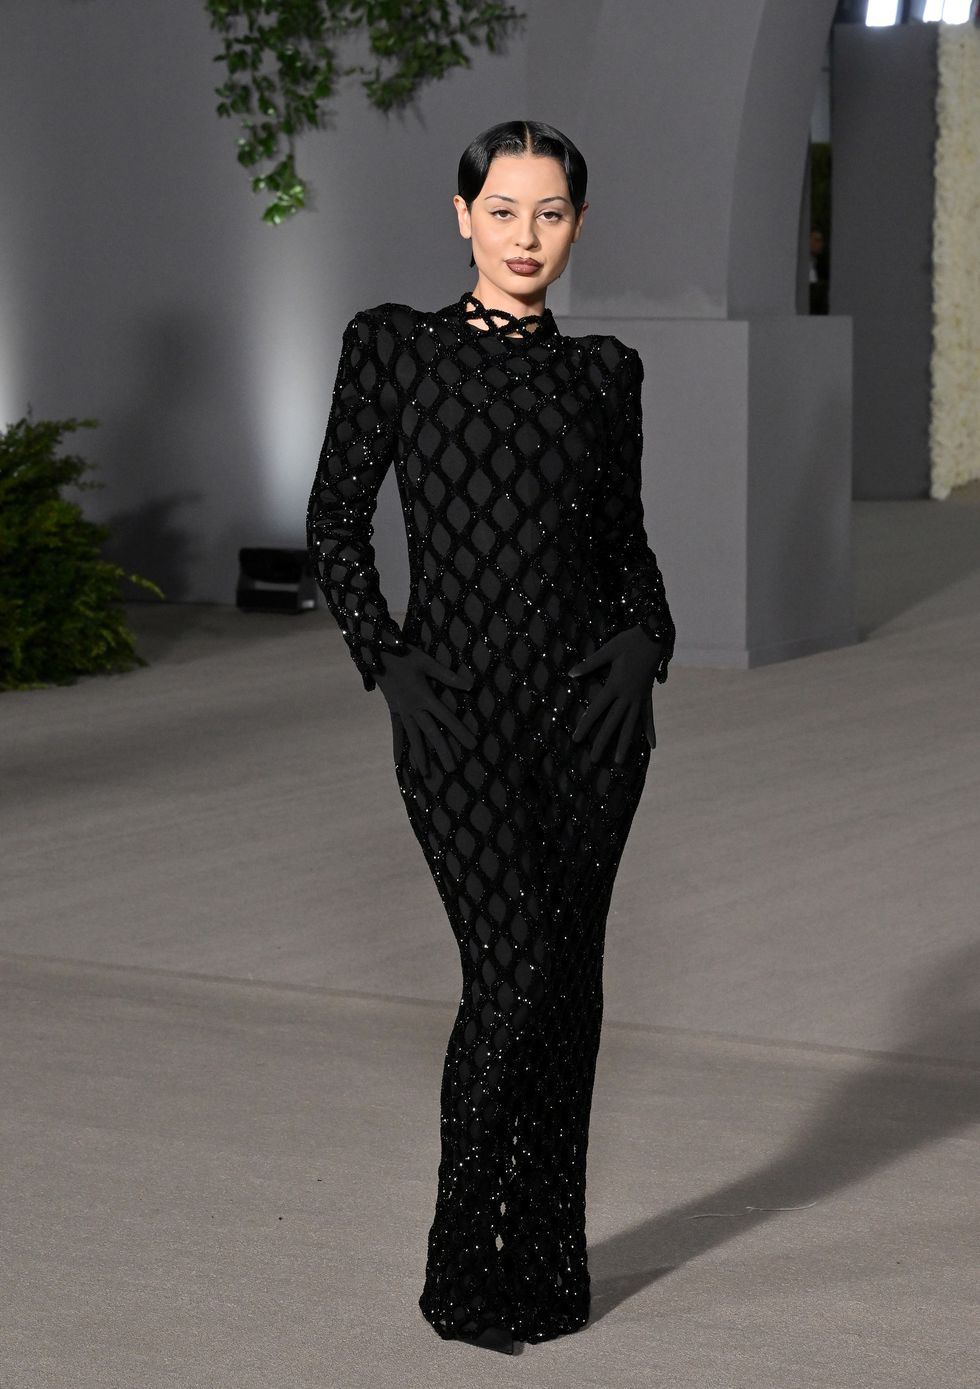 Mercredi Addams : La Nouvelle Influenceuse Mode Goth Girl 2022 ?